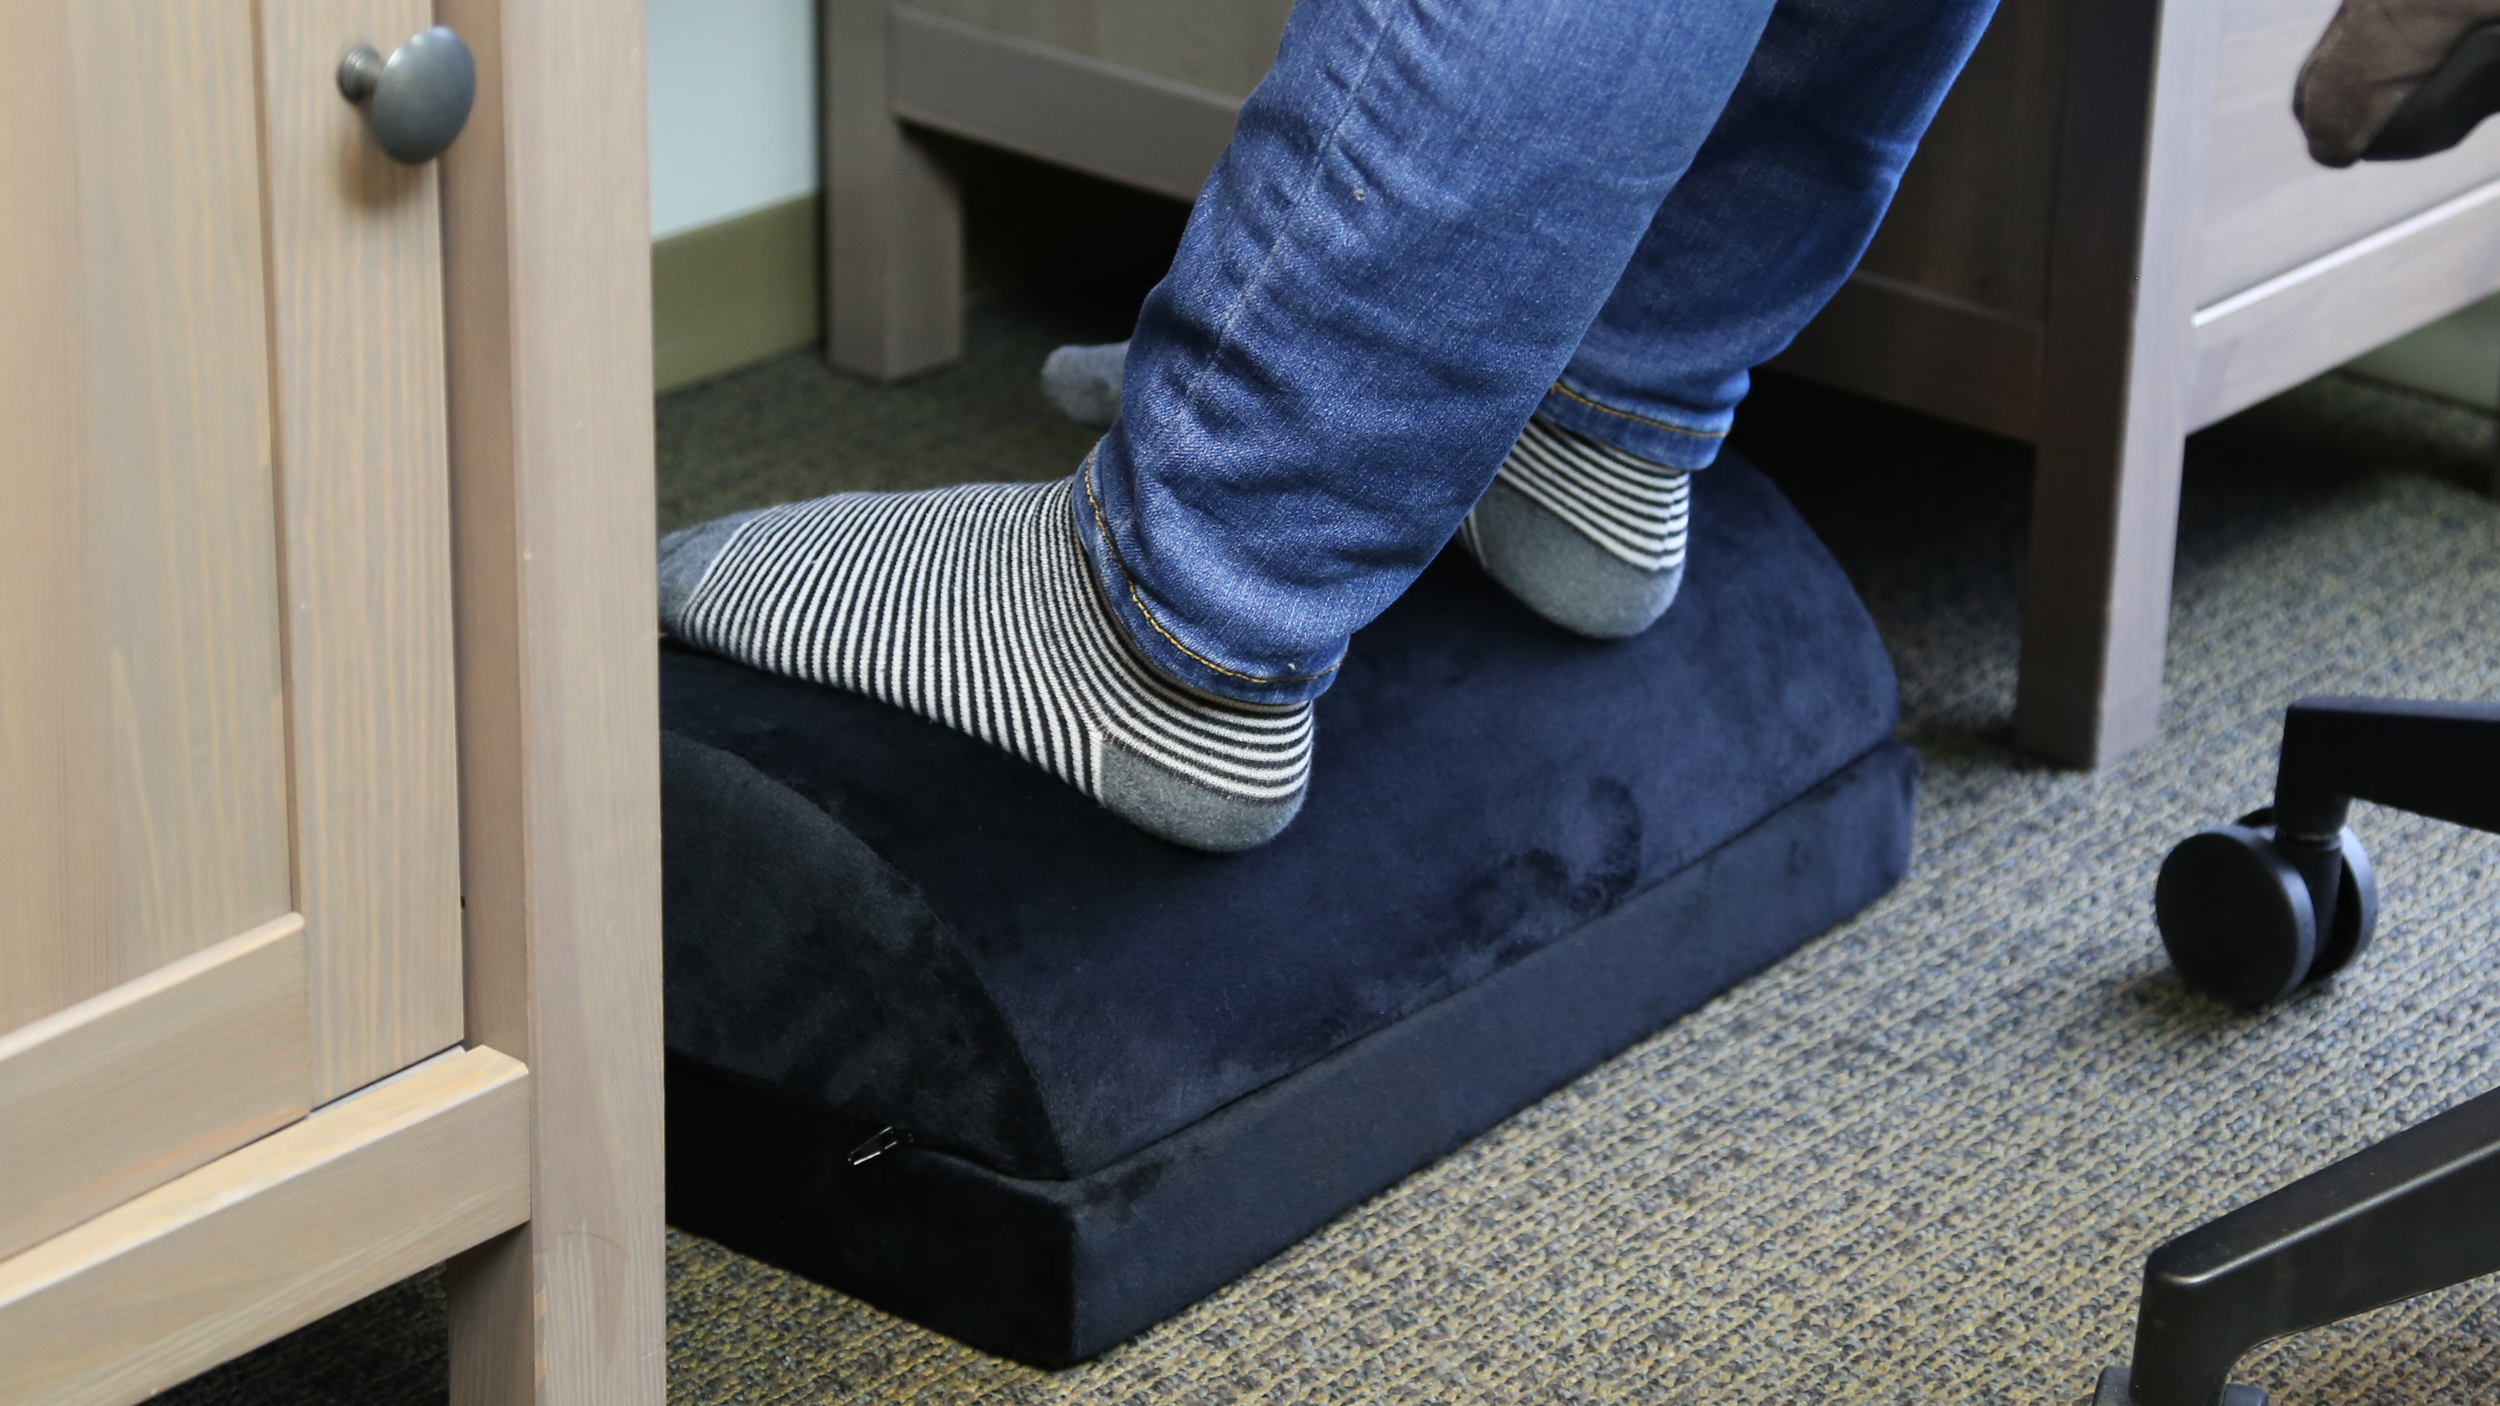 Everlasting Comfort Office Foot Rest Under Desk - Pure Memory Foam